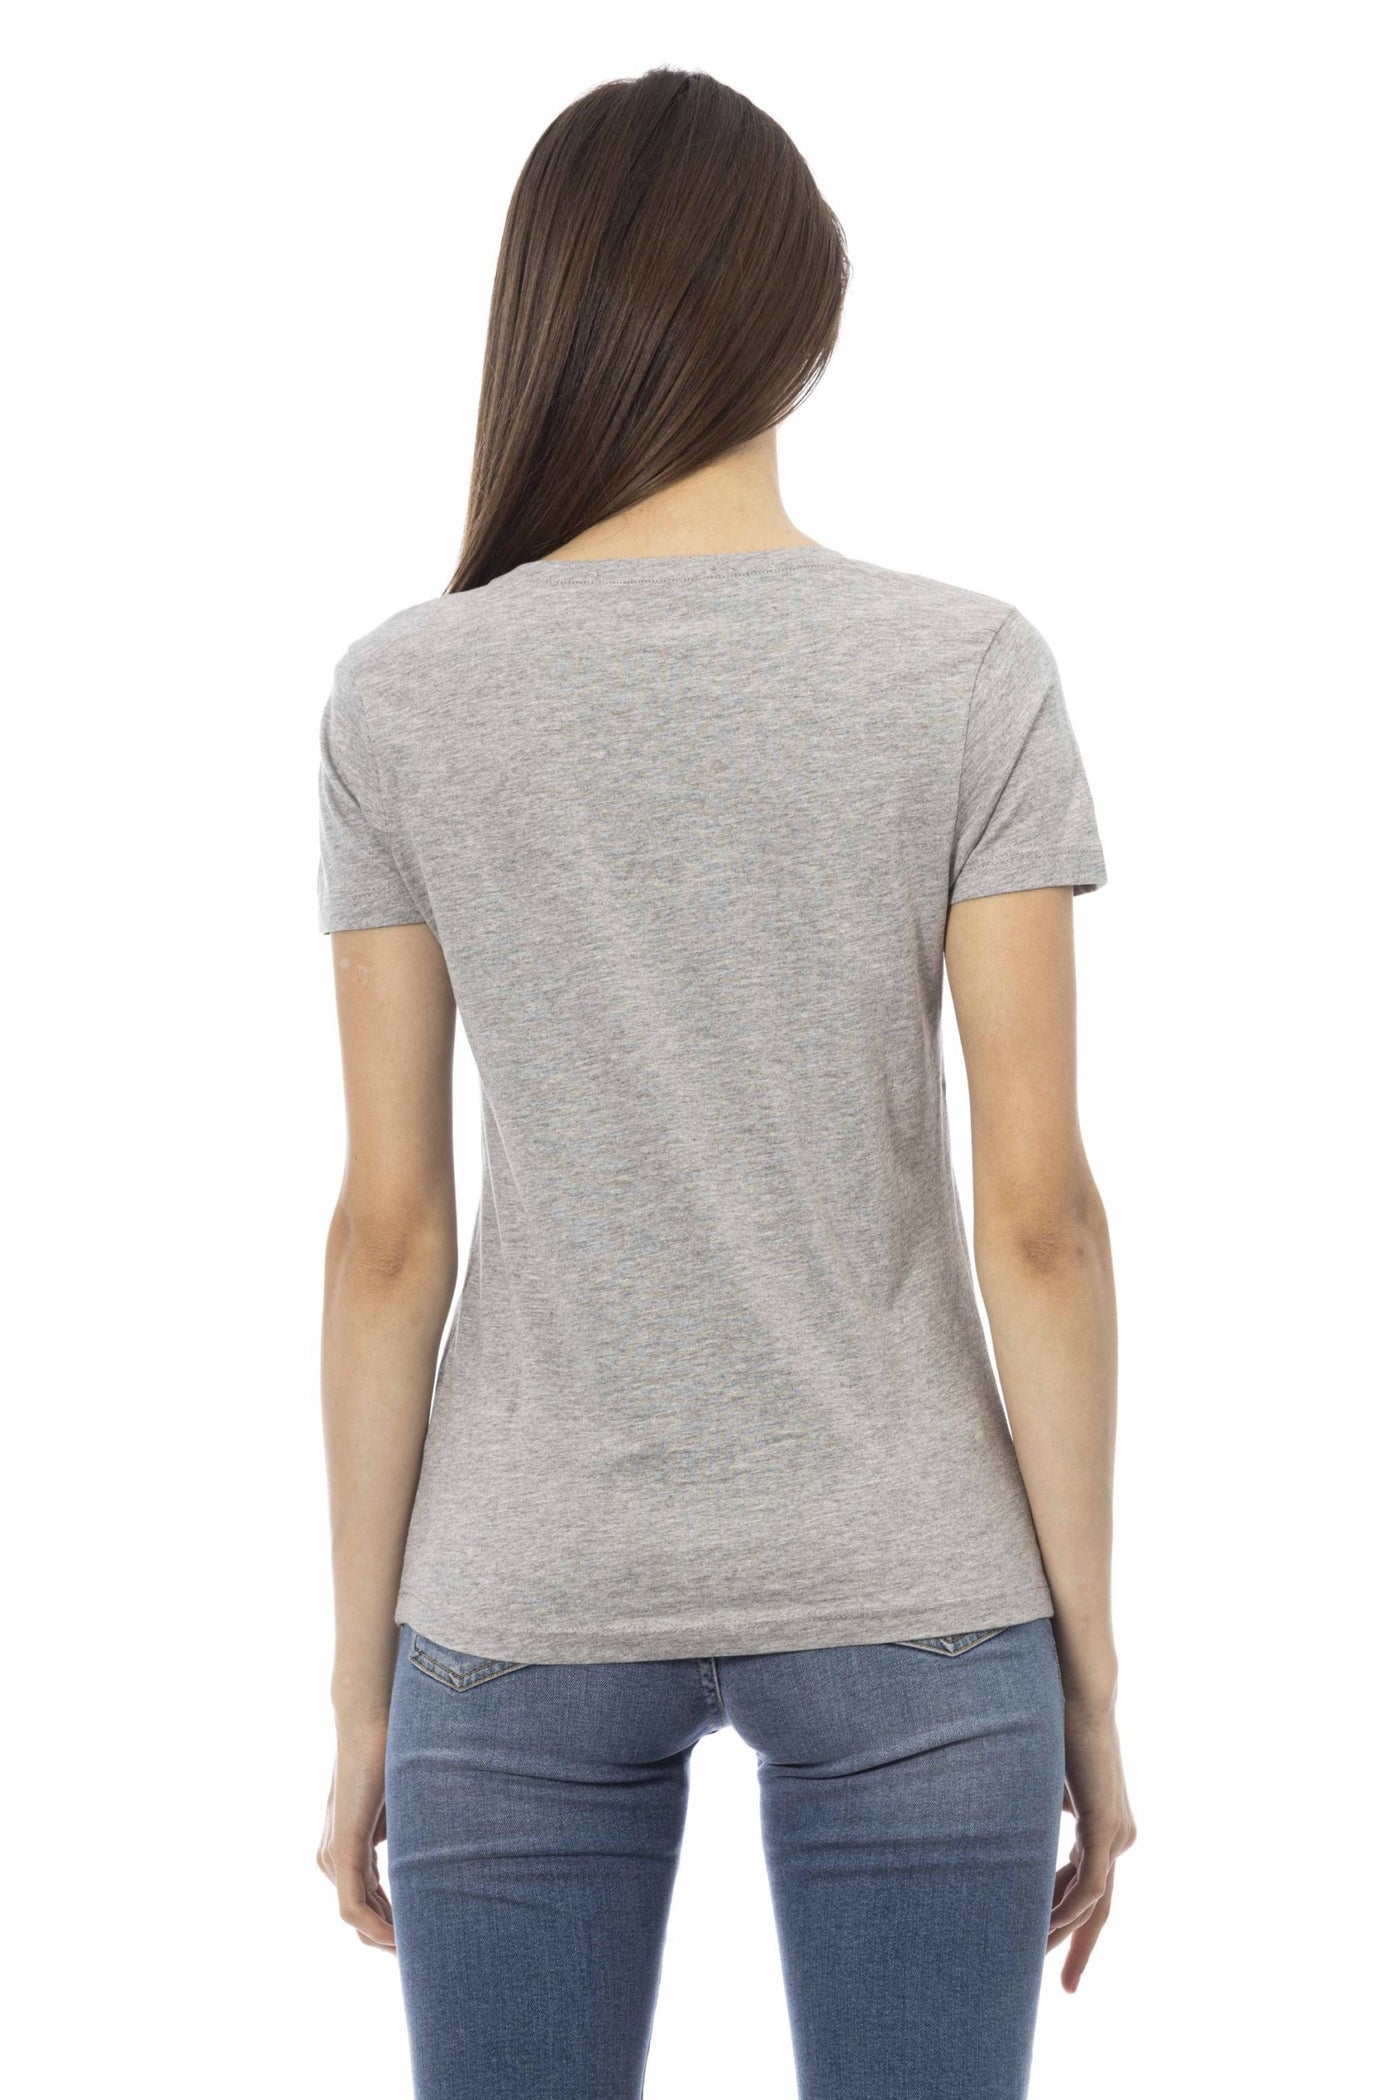 Trussardi Action Gray Cotton Tops & T-Shirt